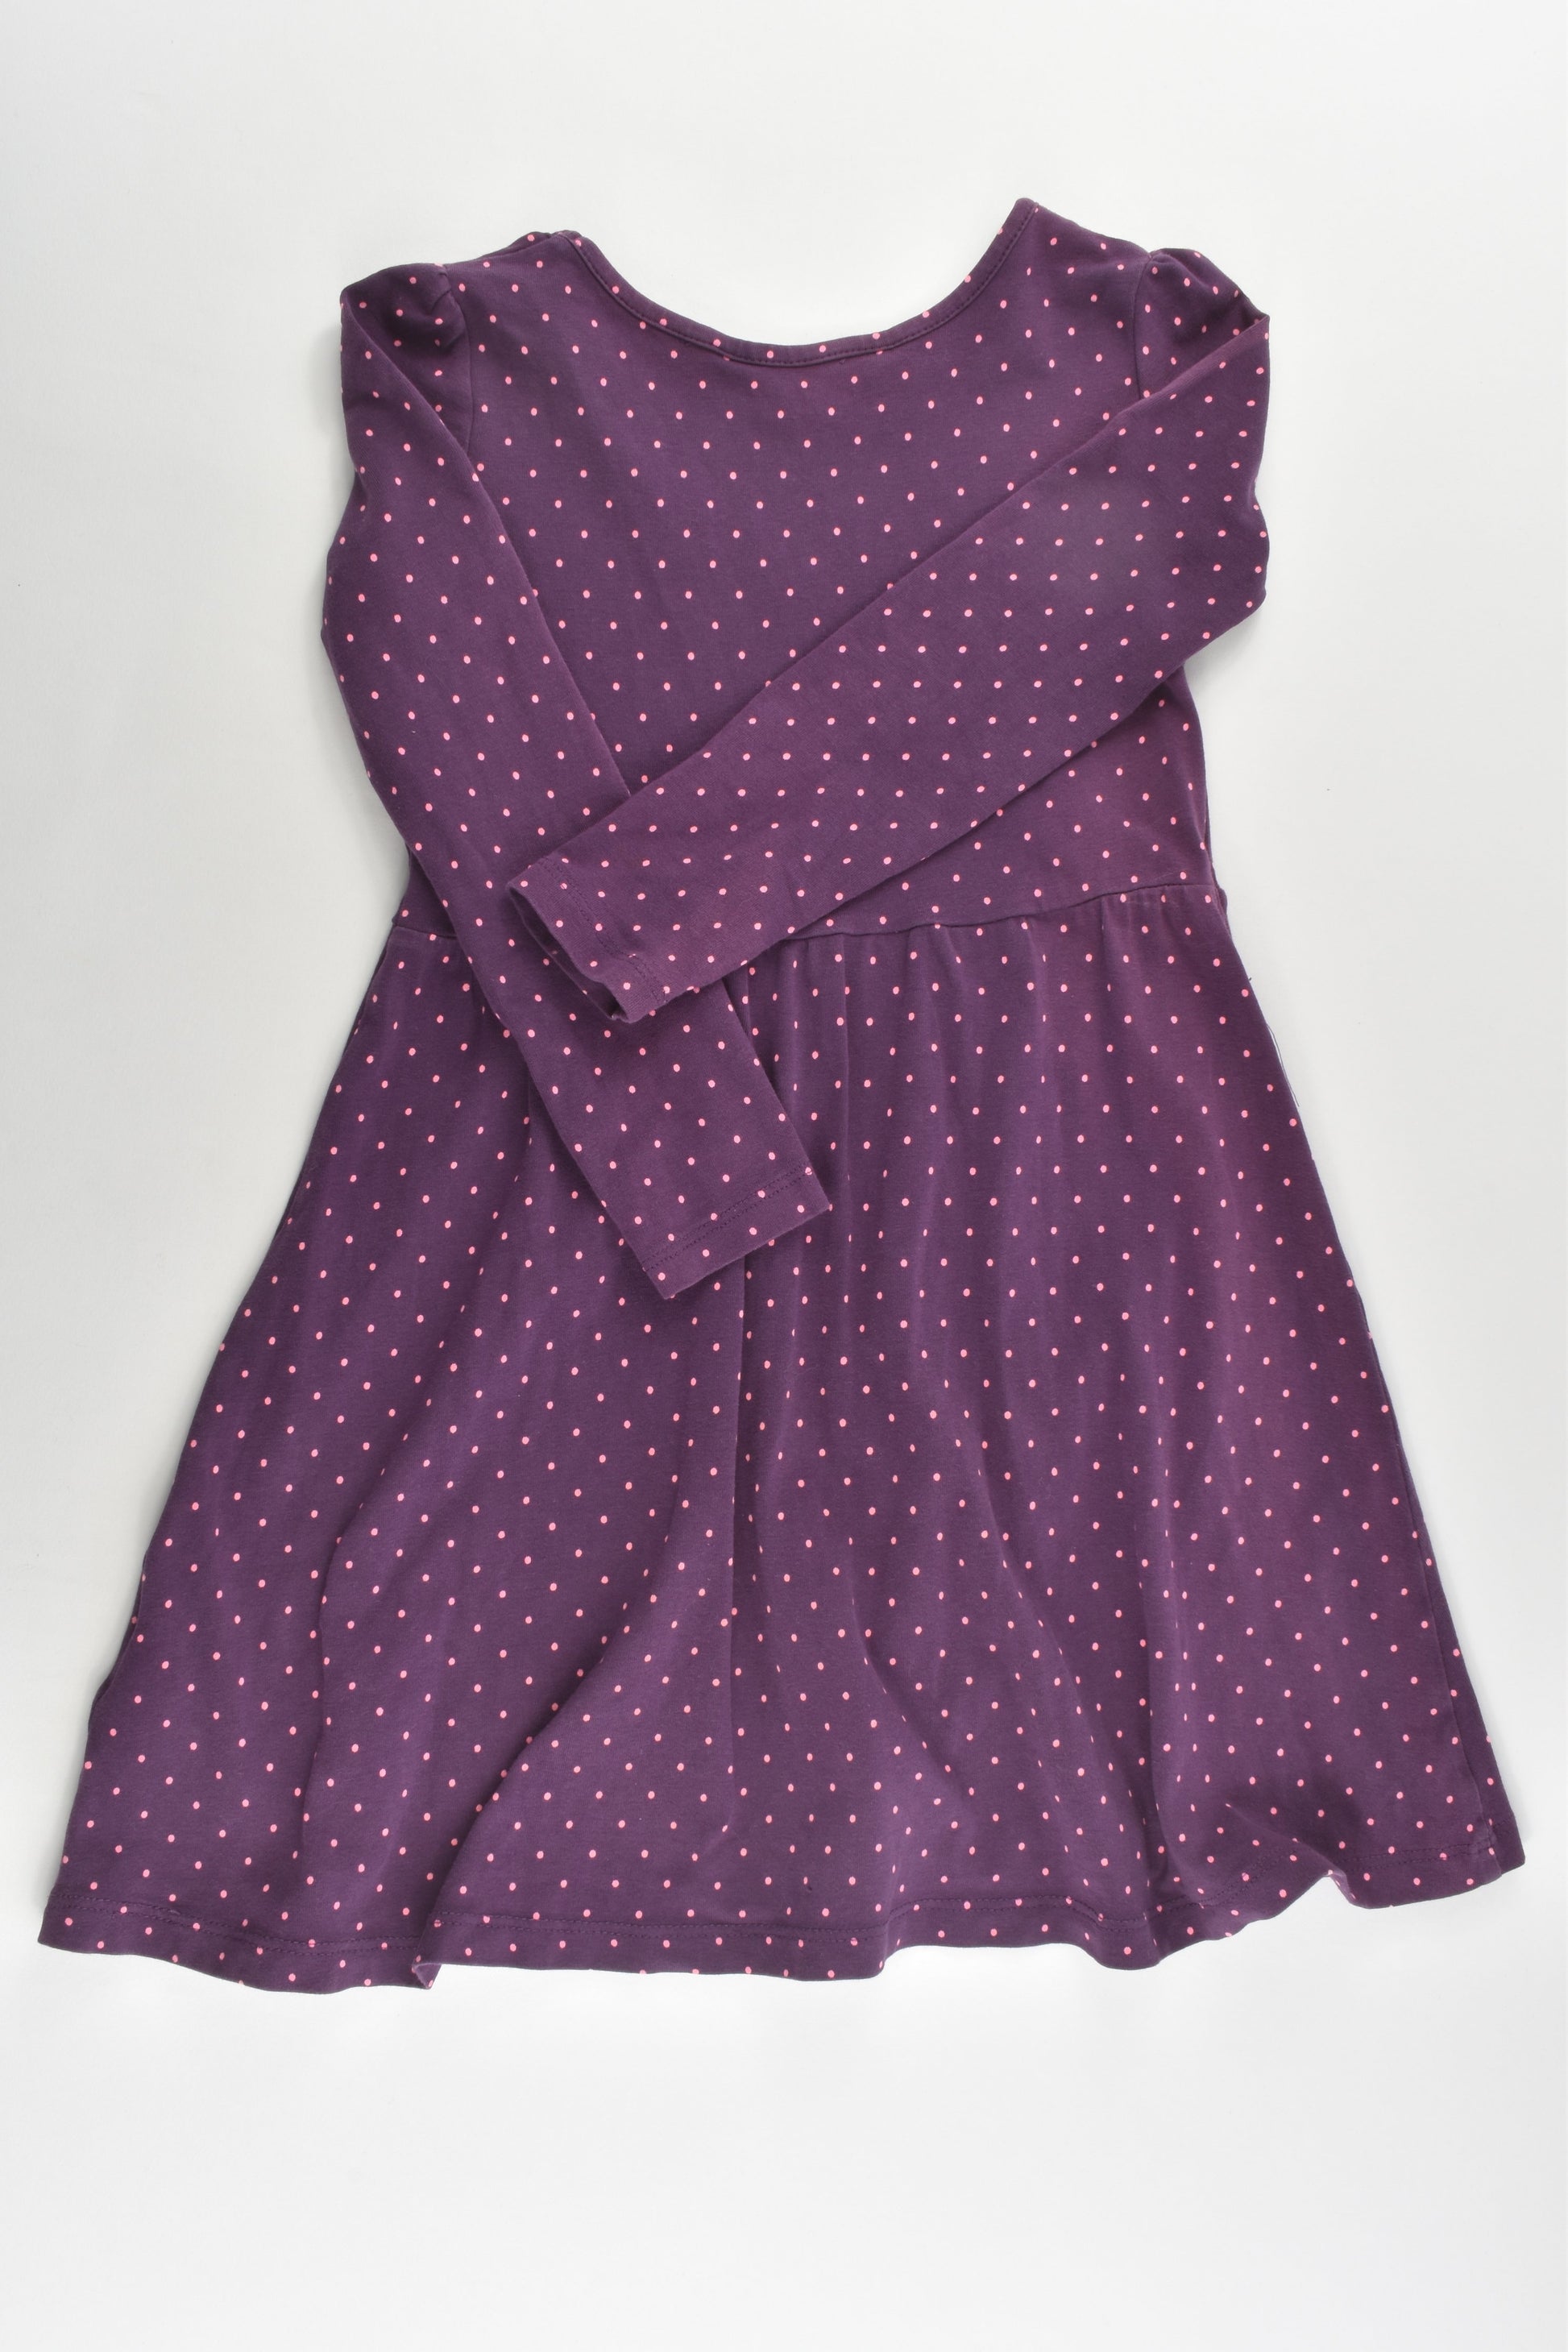 H&M Size 3-4 (98/104 cm) Dots Dress